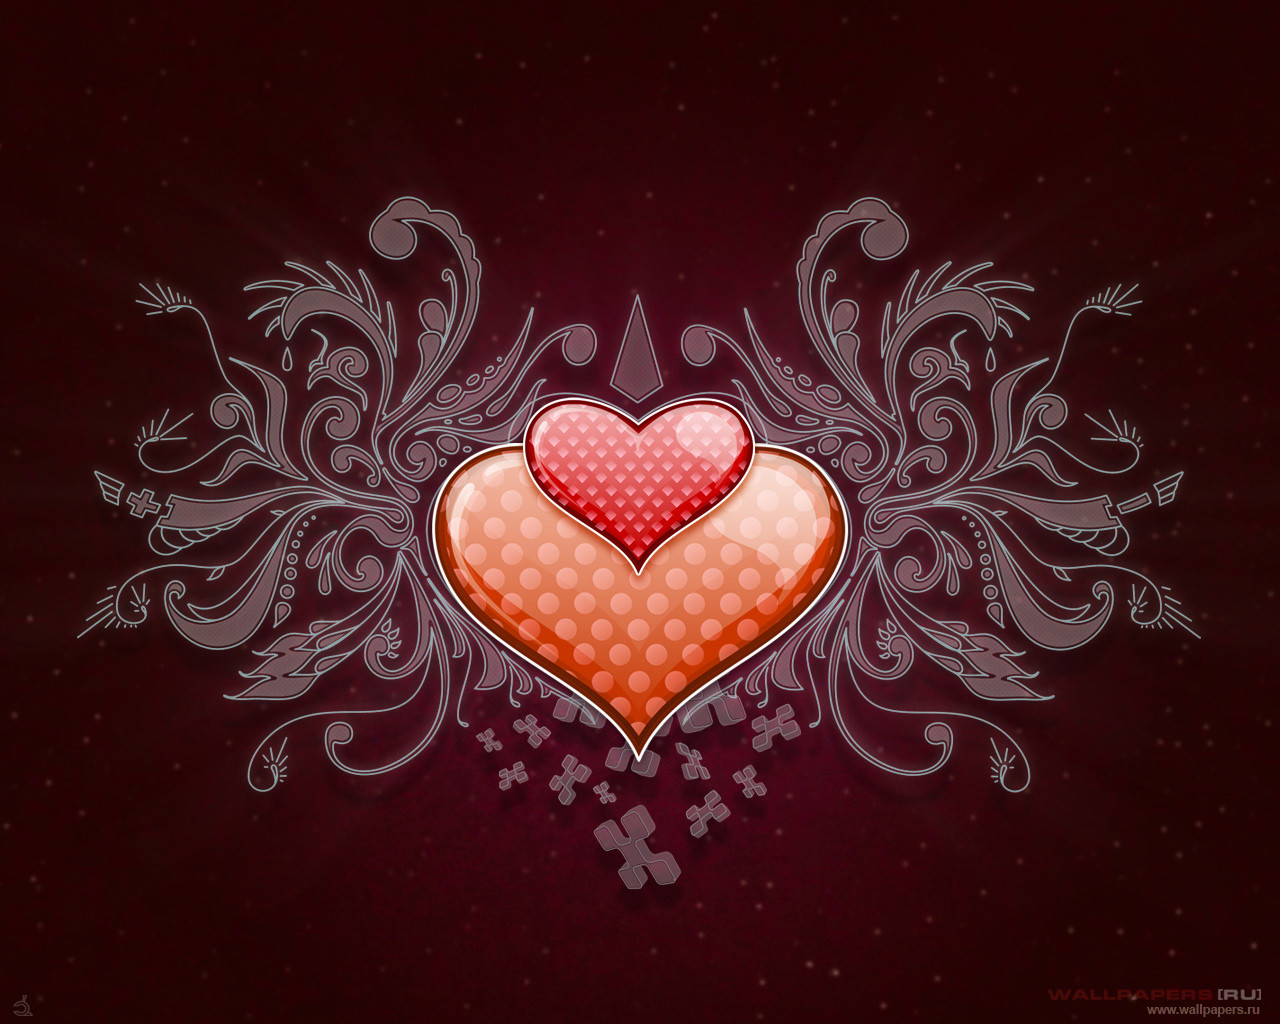 Previous, Love - Hearts wallpaper